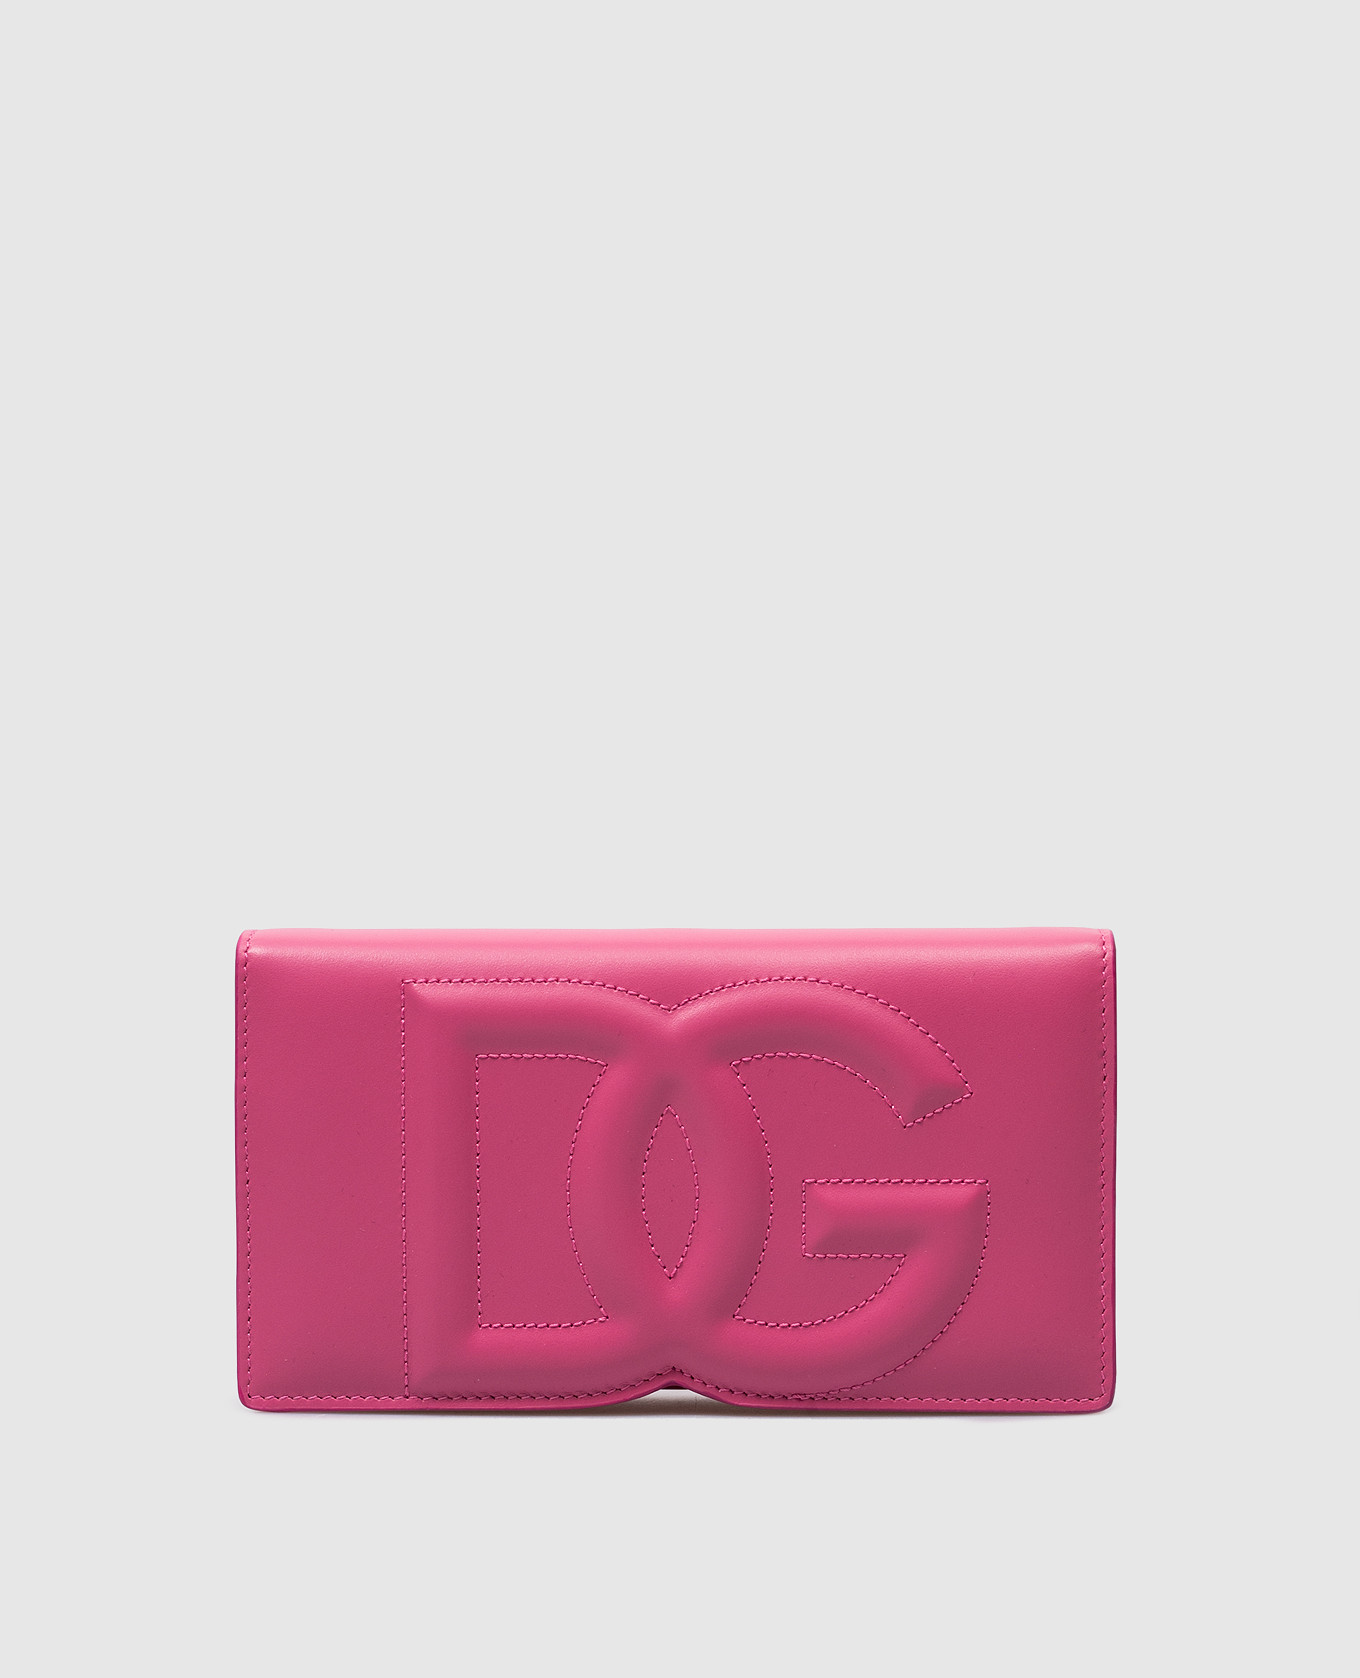 DG LOGO pink clutch